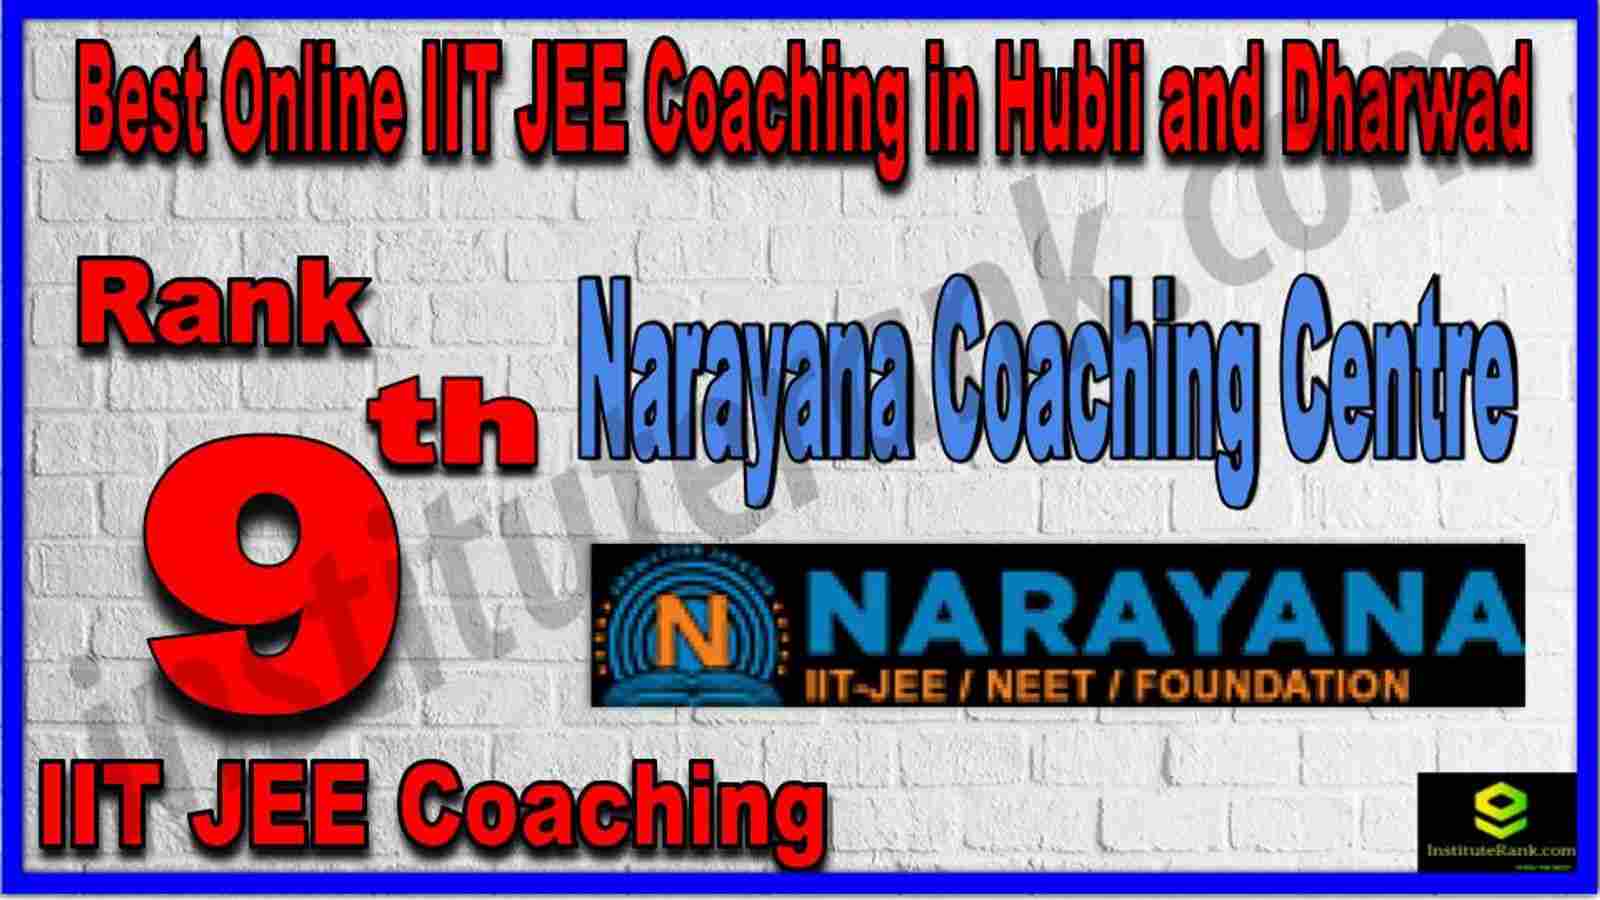 Rank 9th Best Online IIT JEE Coaching in Hubli and Dharwad